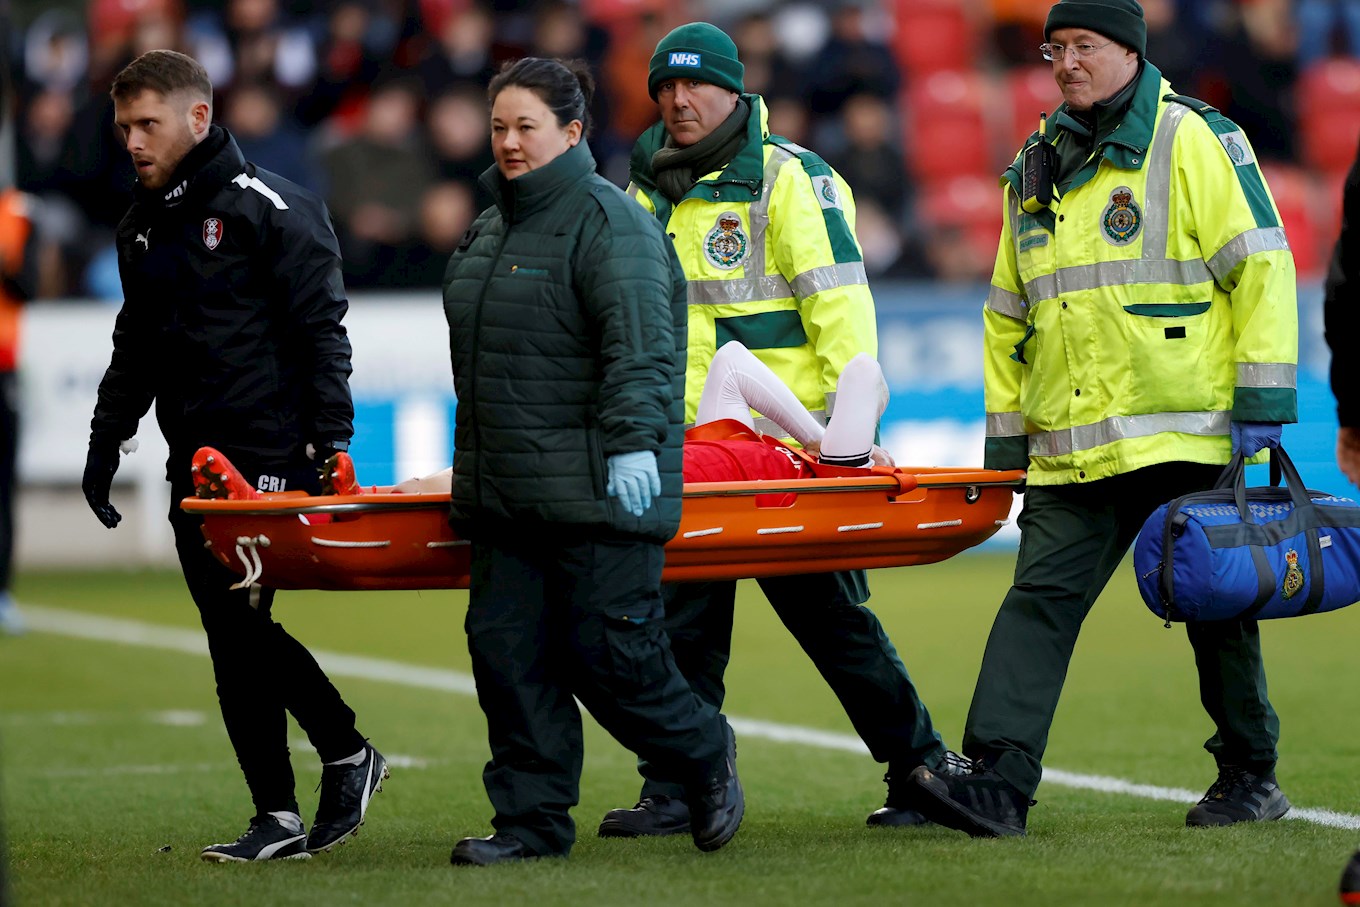 RUFC v Stoke City - 057 - Ben Wiles - Injury.jpg